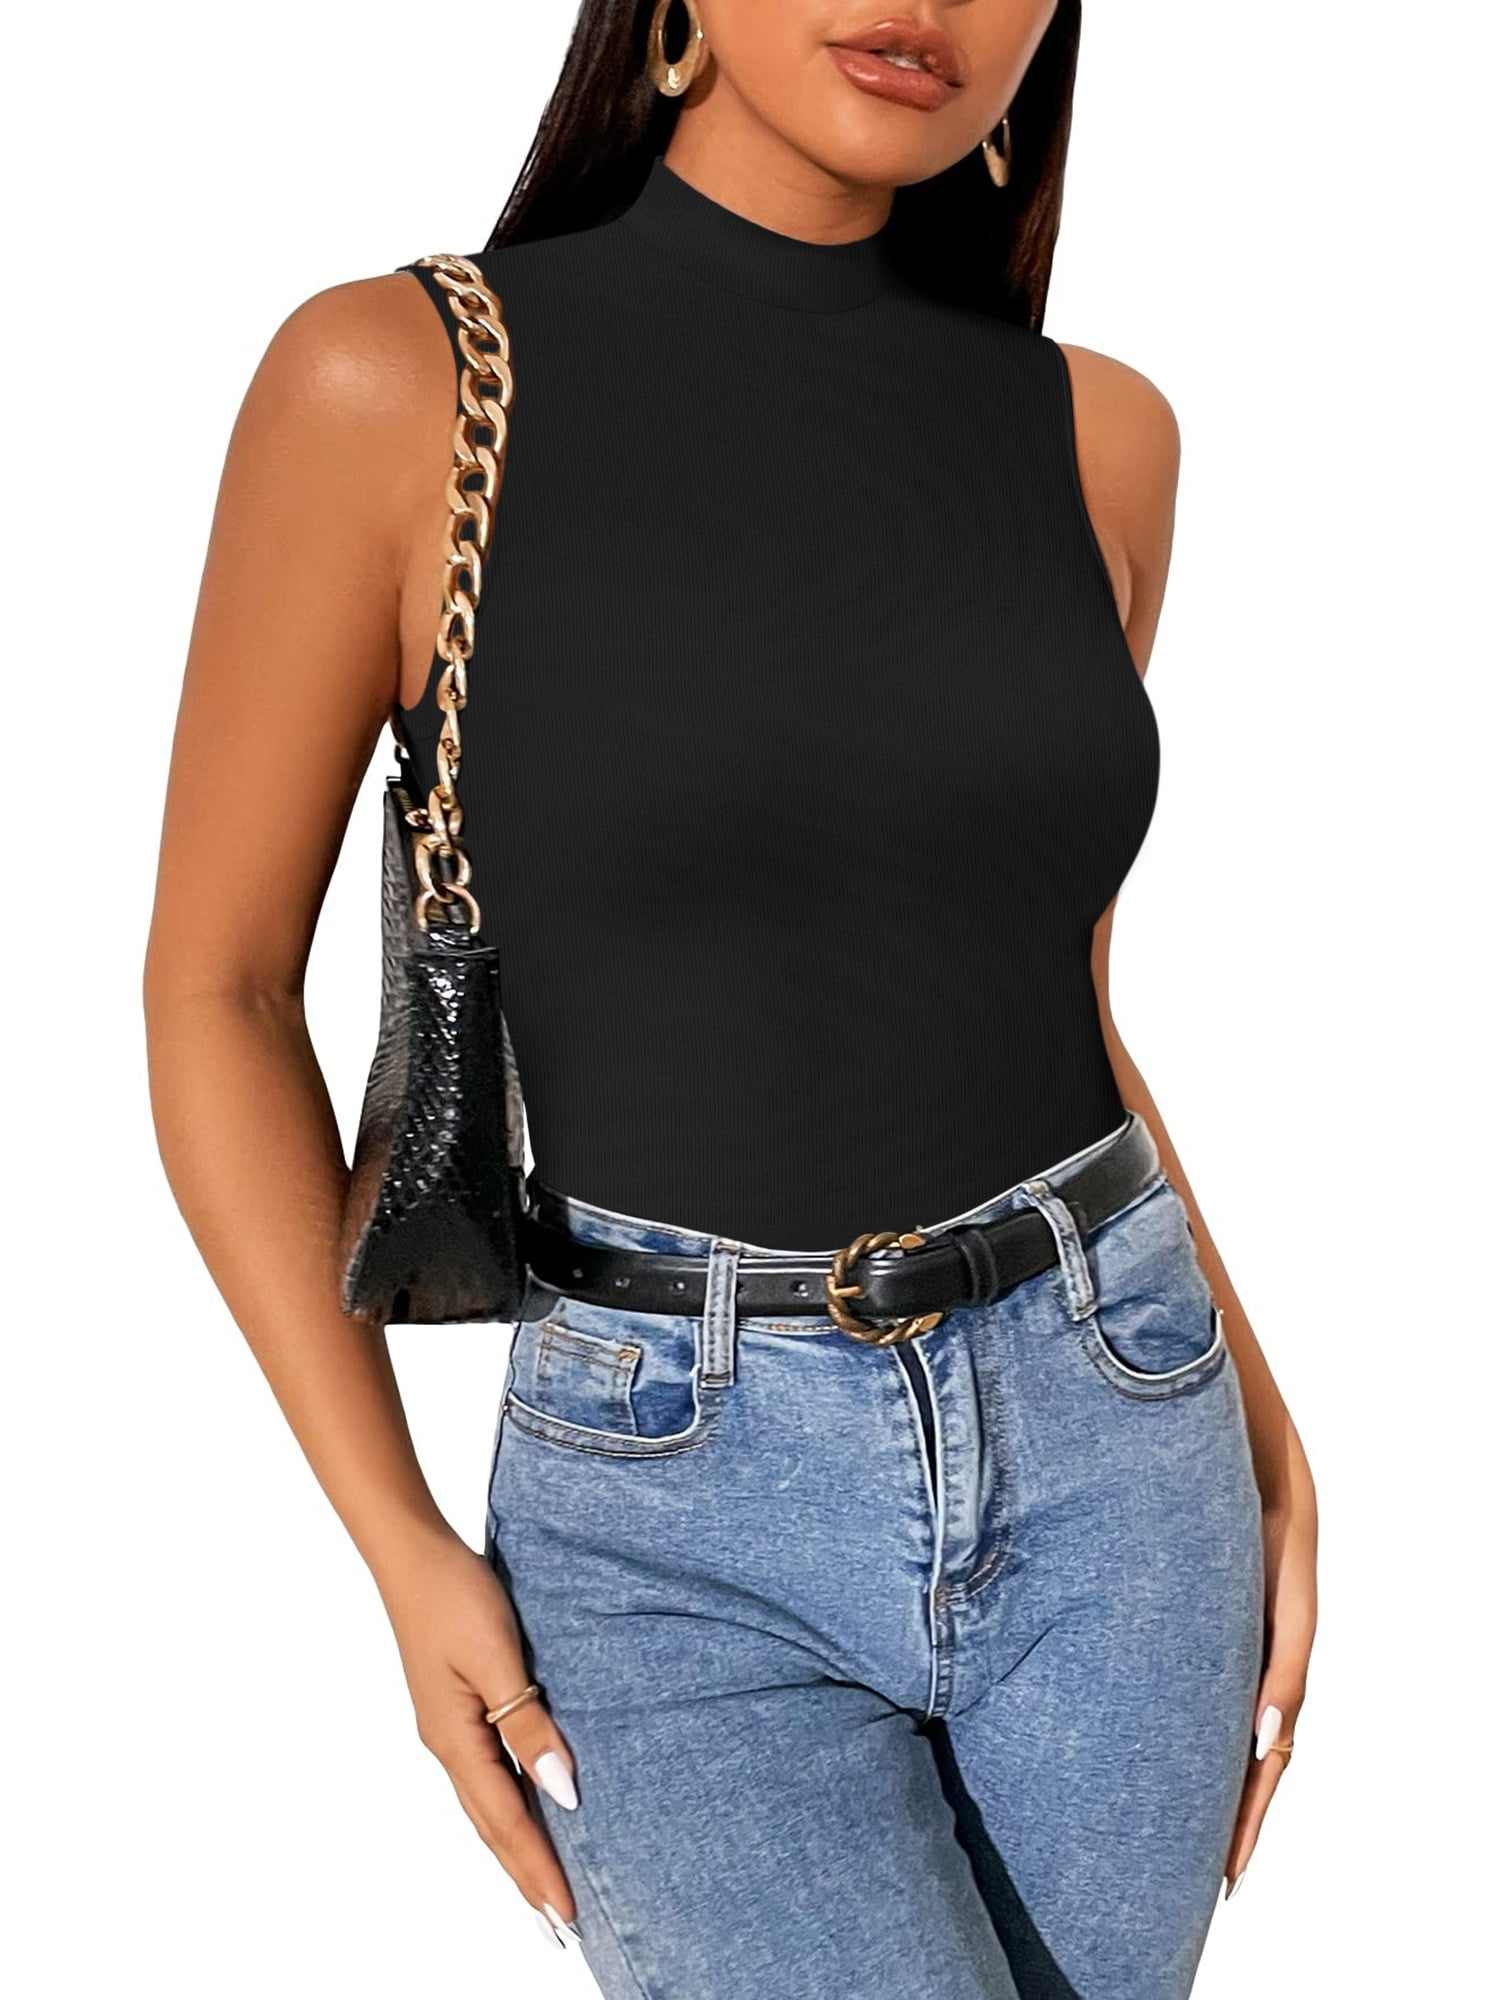 Brand Flex Women's Plain Black Sleeveless High Neck/Turtle Neck Top Stretch  Slim Cotton T-Shirt for Women Sleeveless Top for Women